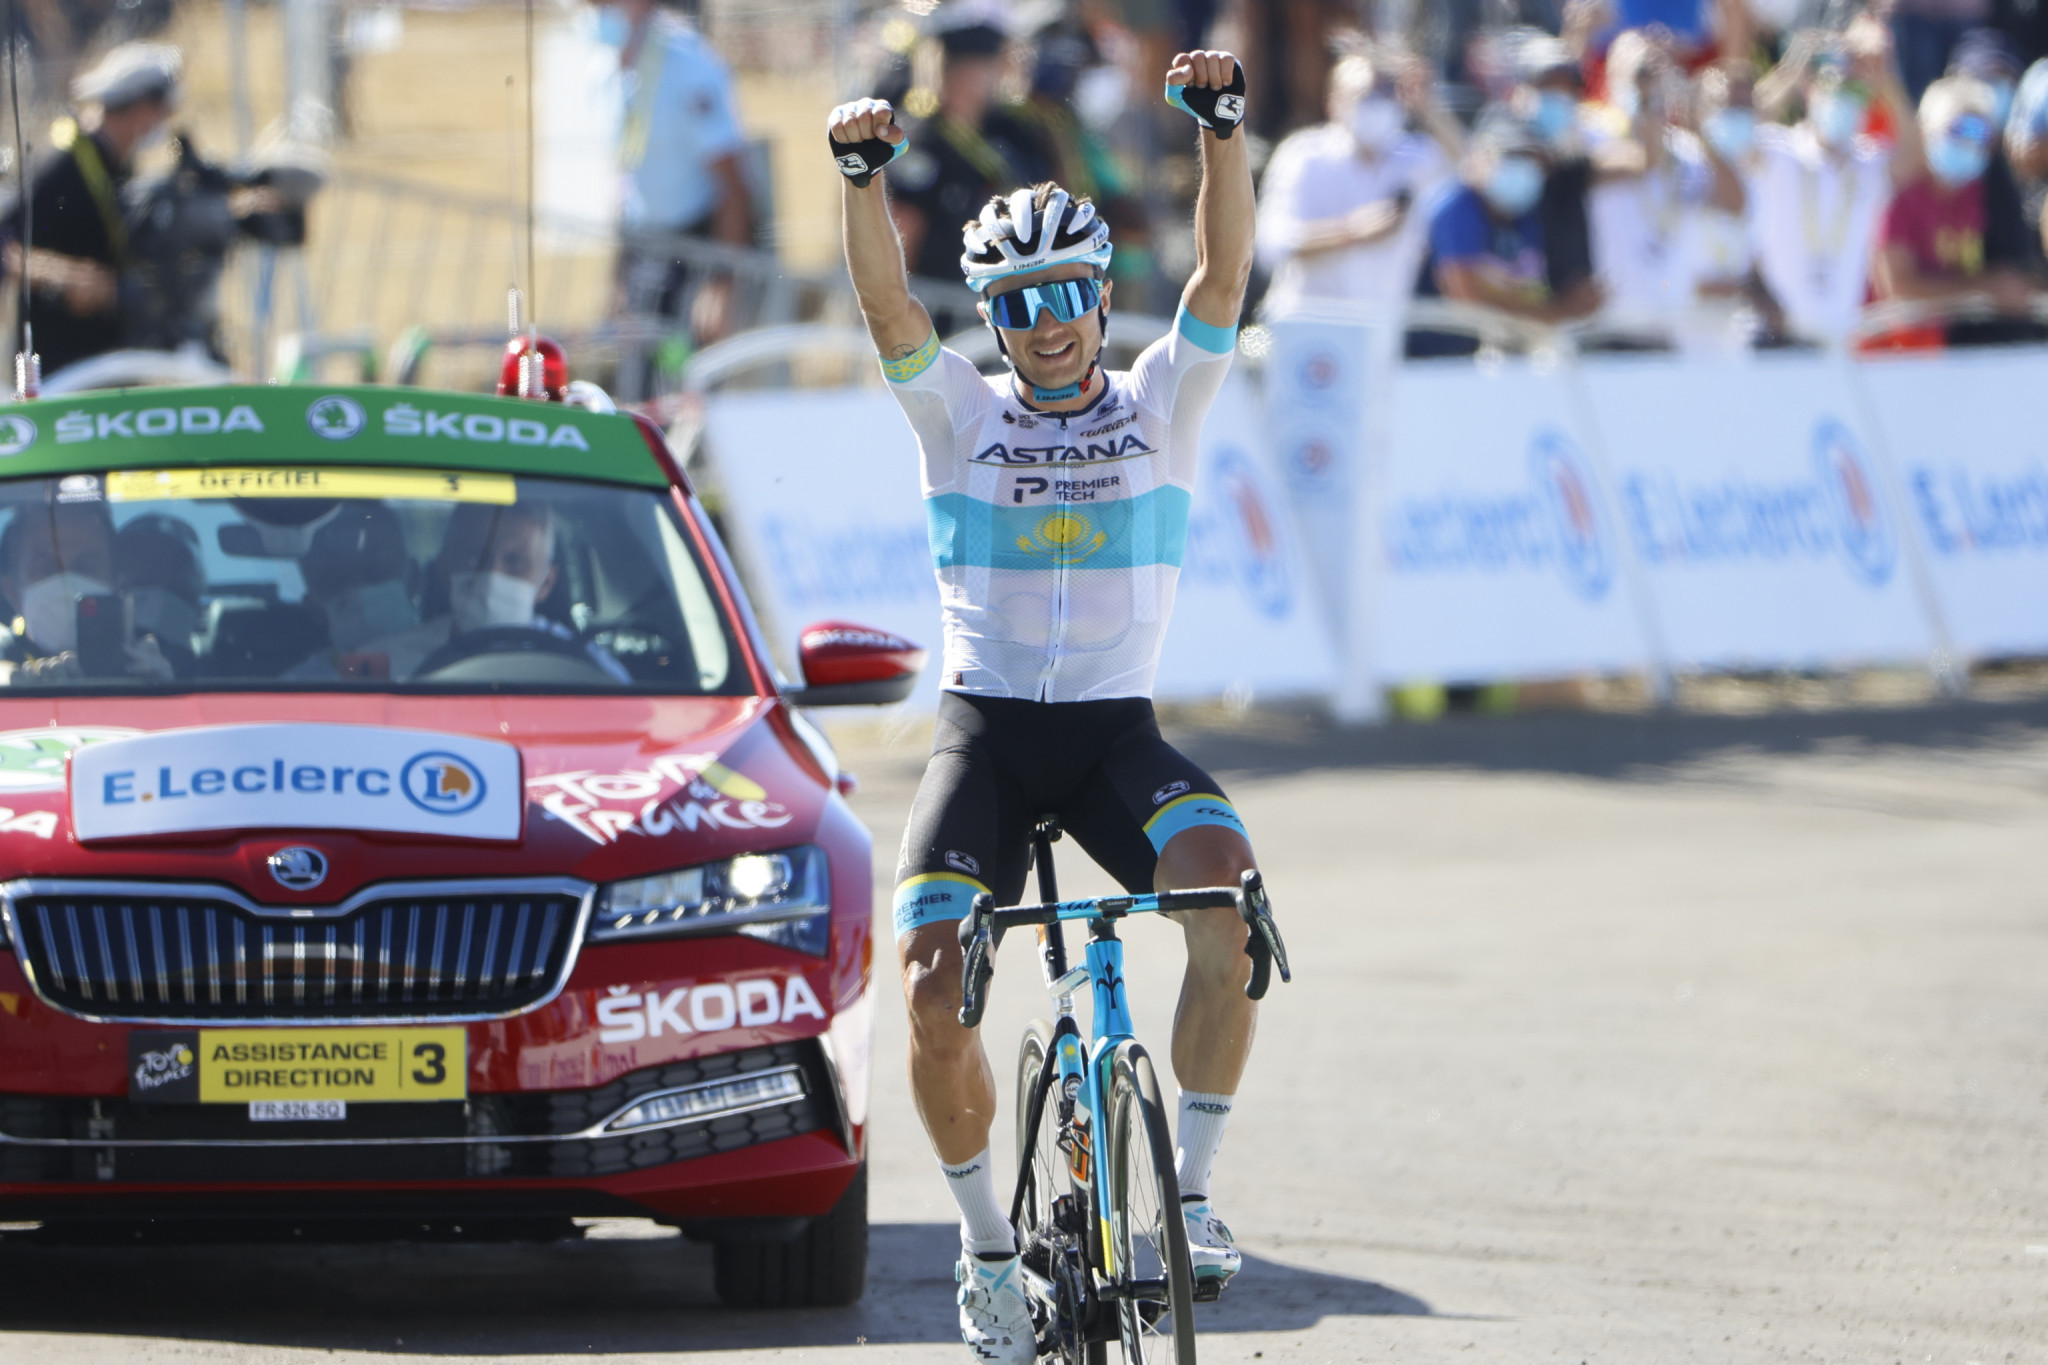 Lutsenko breaks clear to triumph on sixth stage of Tour de France